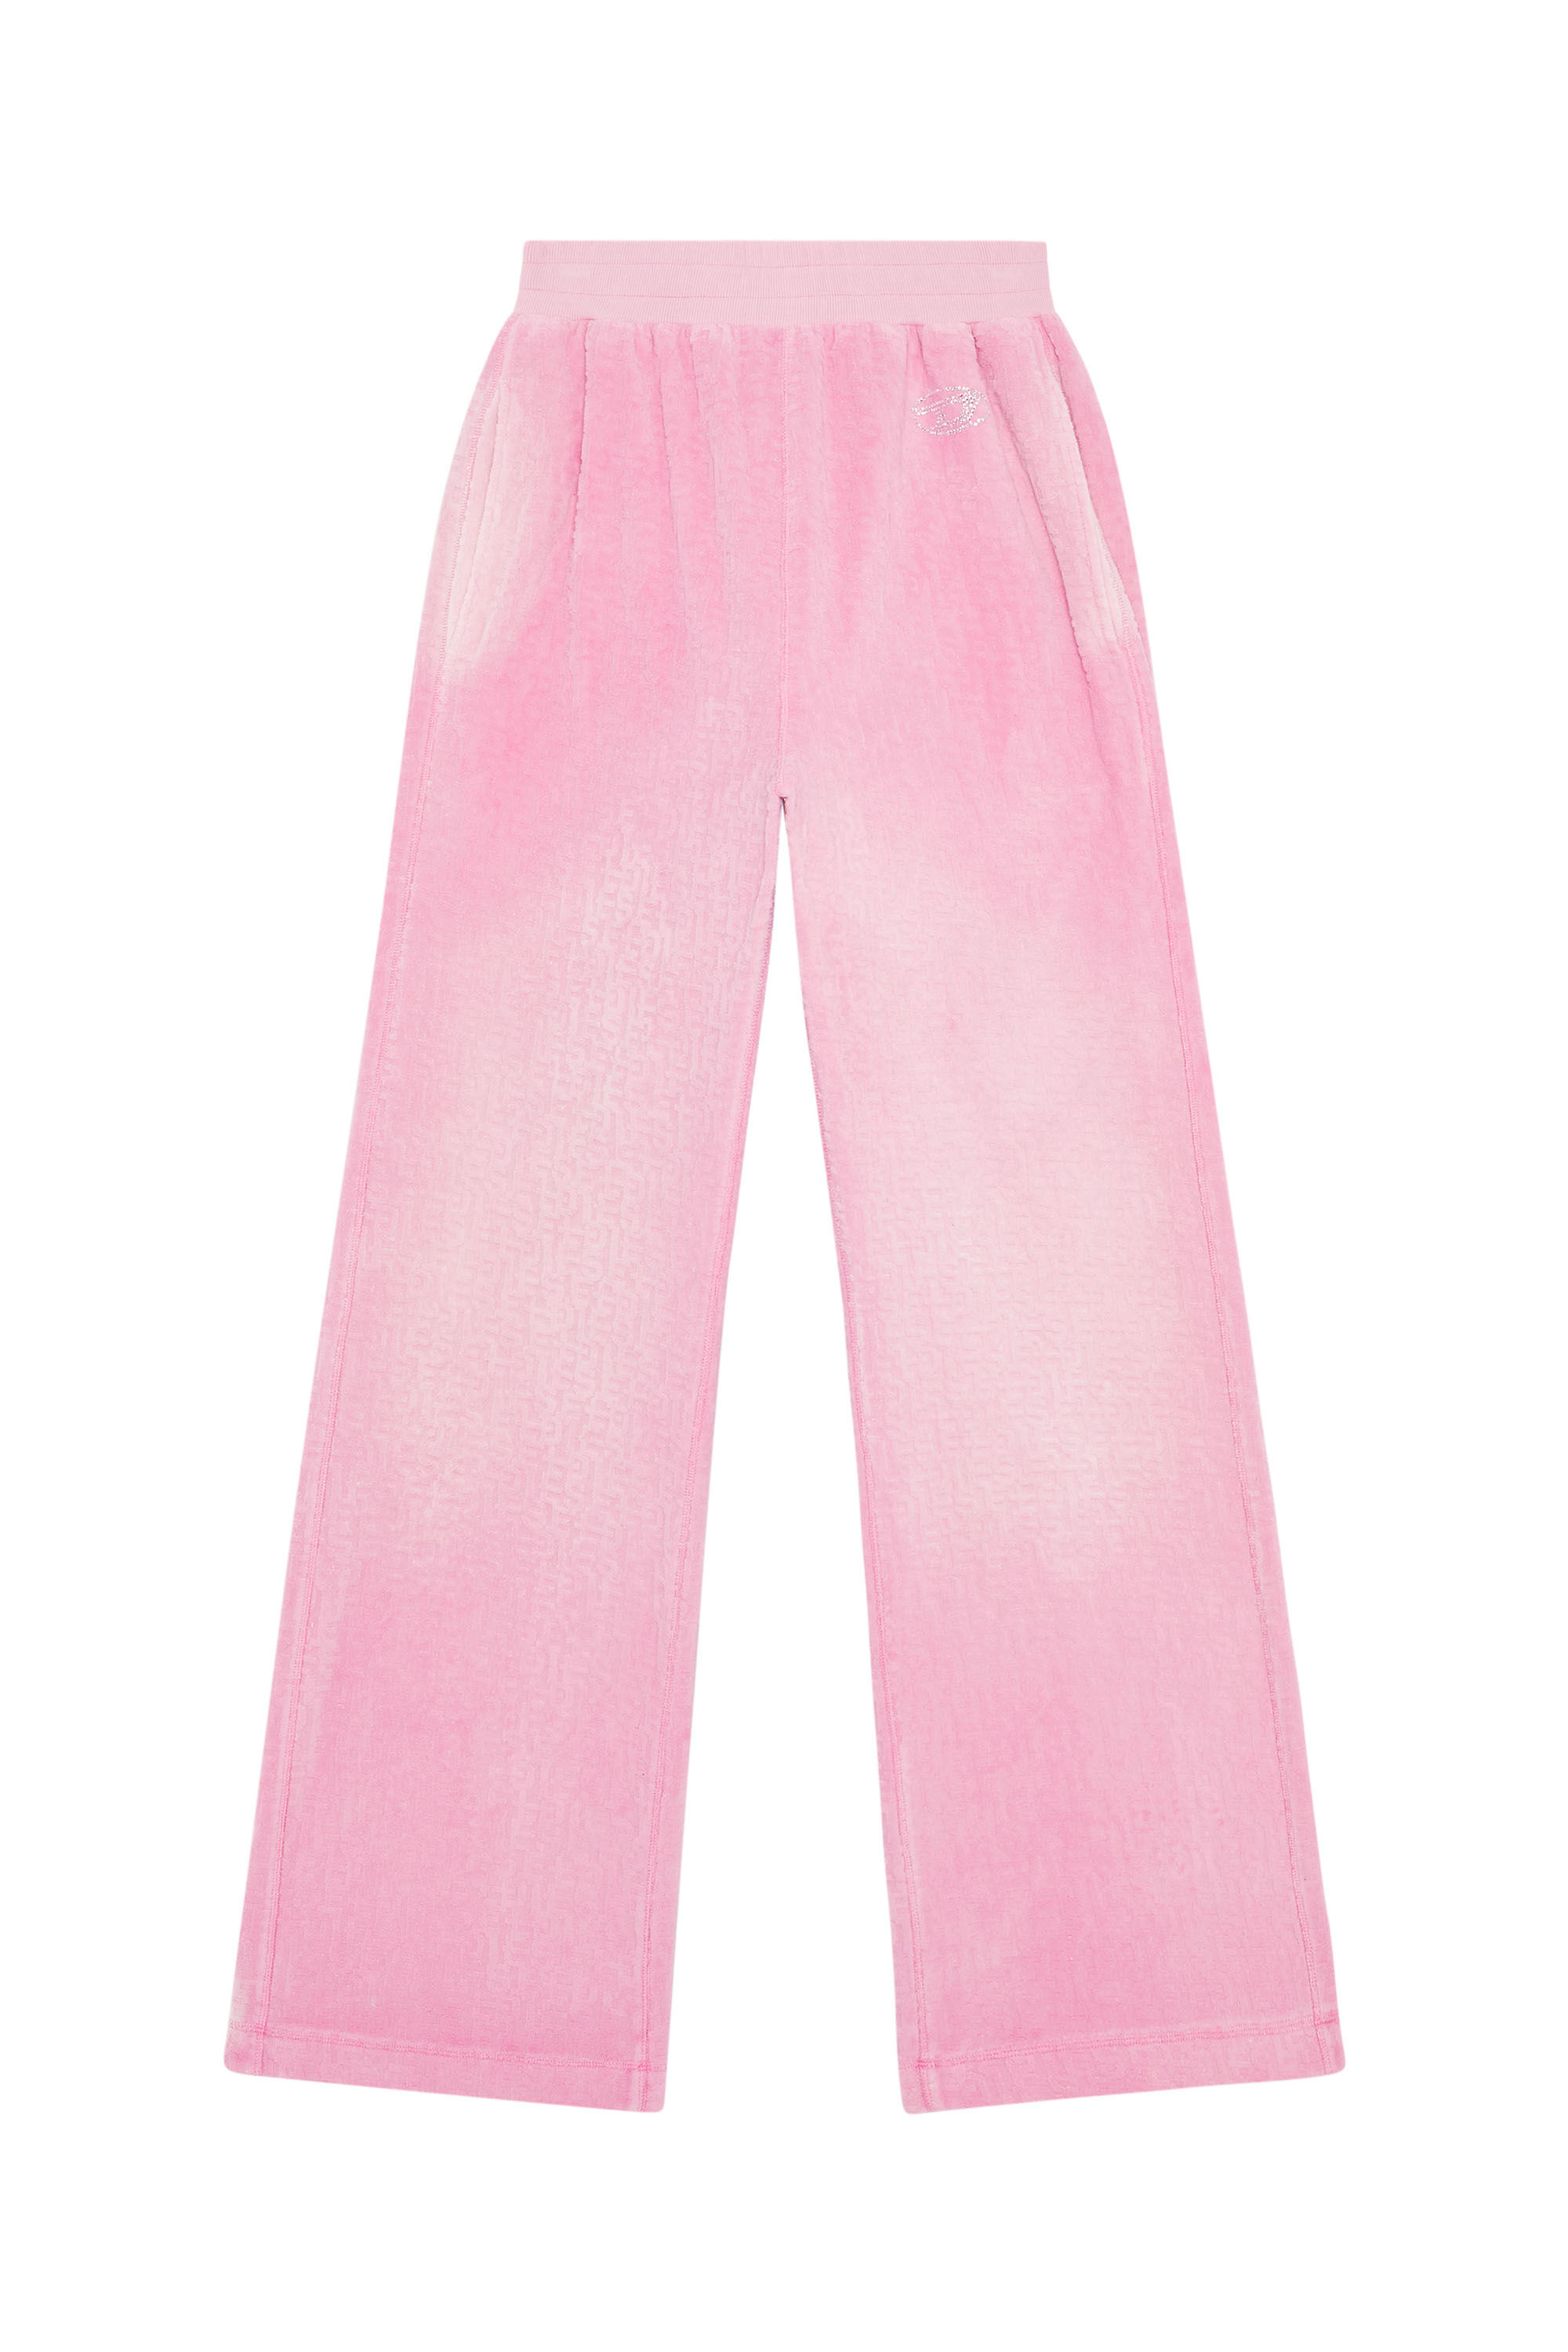 NWT Zara Women's Ribbed Wide Leg Pants Elastic Waist Band Stretch Pink Size  M